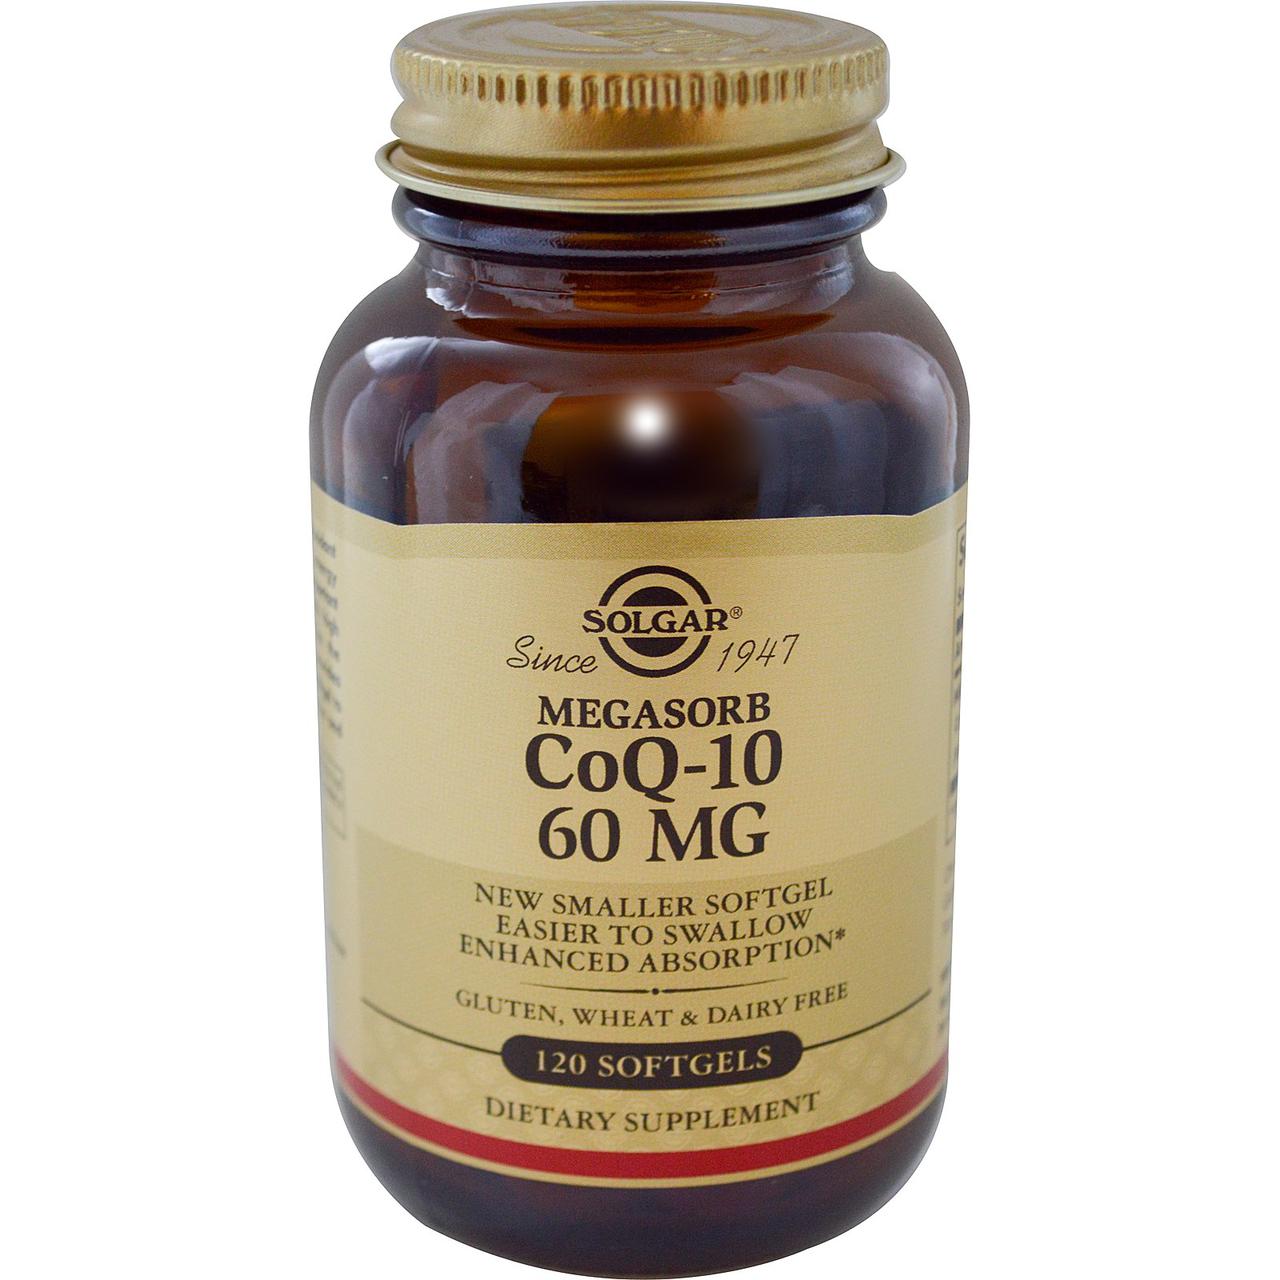 Коензим Q10 Мегасорб (CoQ-10, Megasorb), Solgar, 60 мг, 120 капсул